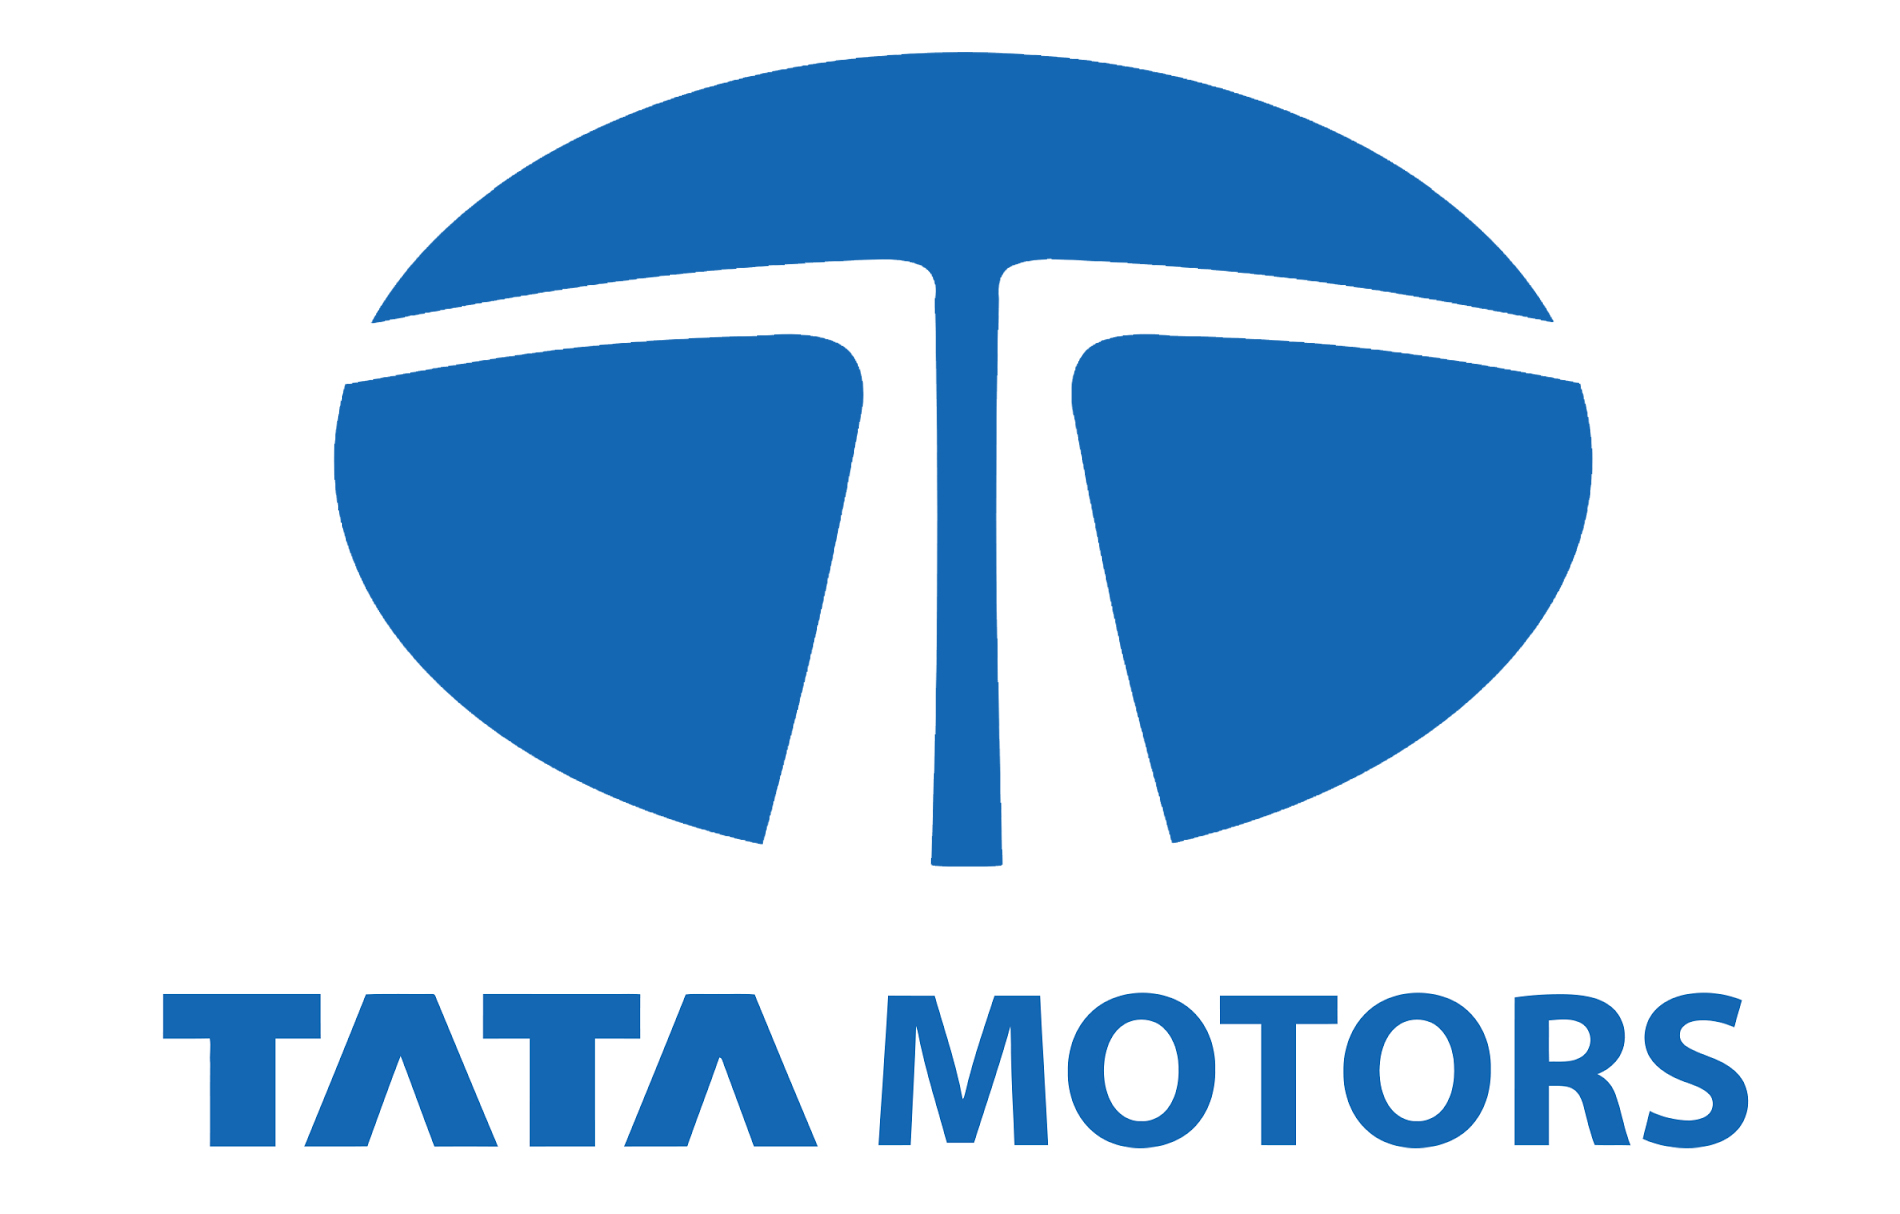 Tata Motors Cars Showroom - DPS Cars|Service Center|Automotive